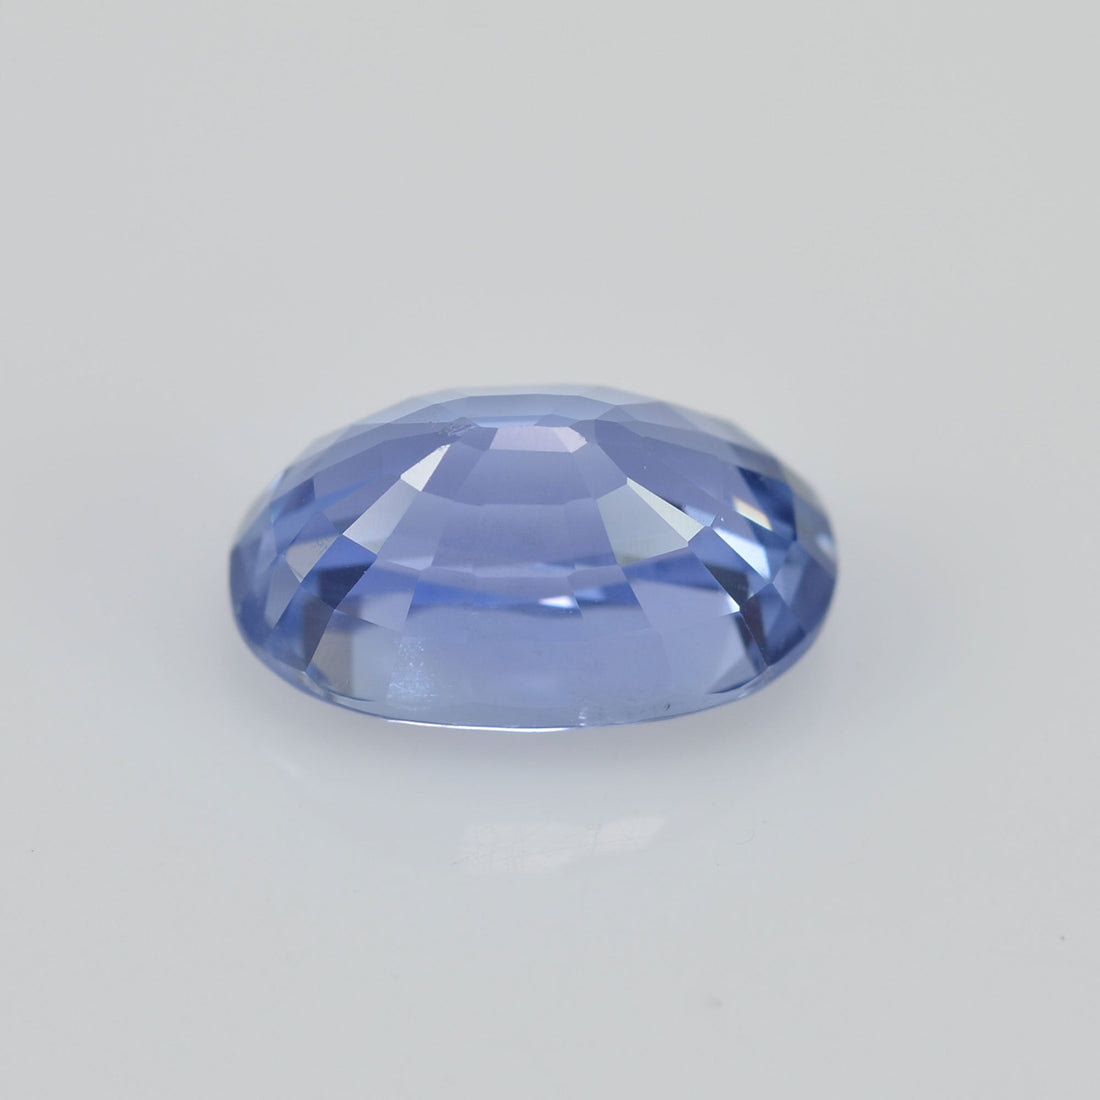 3.20 cts Unheated Natural Blue Sapphire Loose Gemstone Oval Cut - Thai Gems Export Ltd.